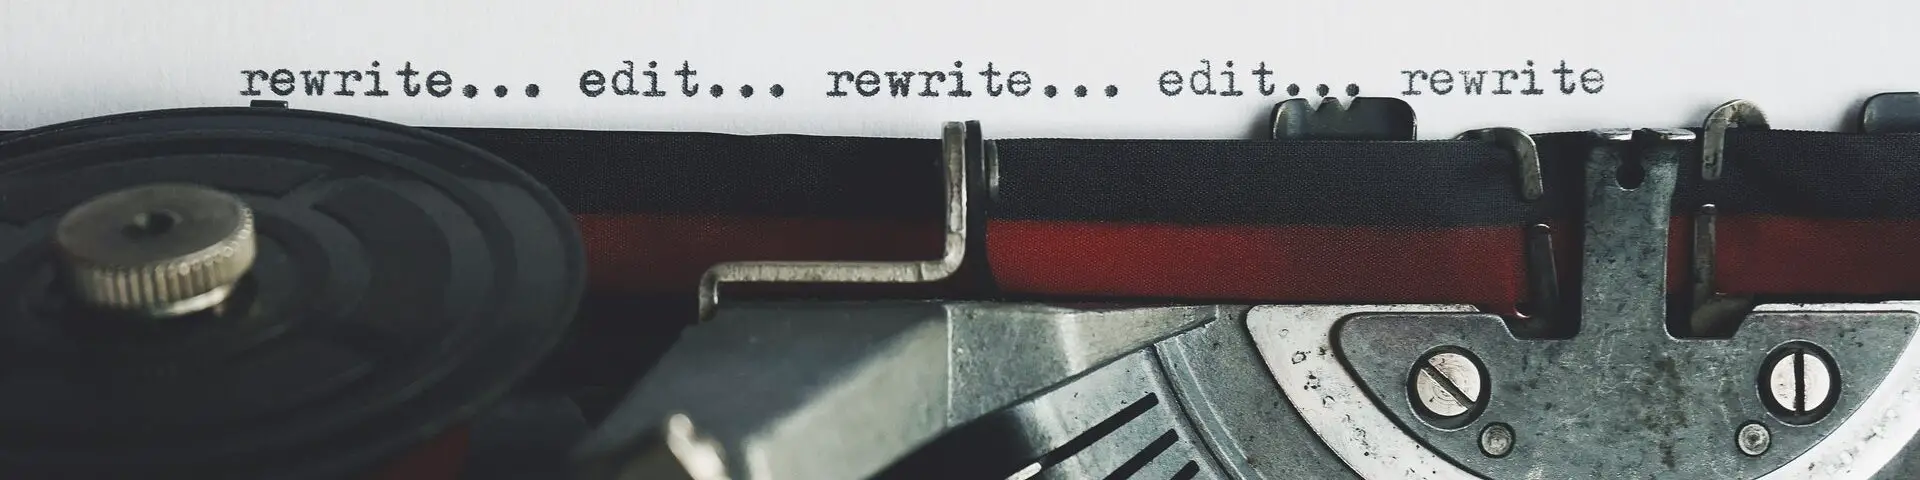 new author at typewriter